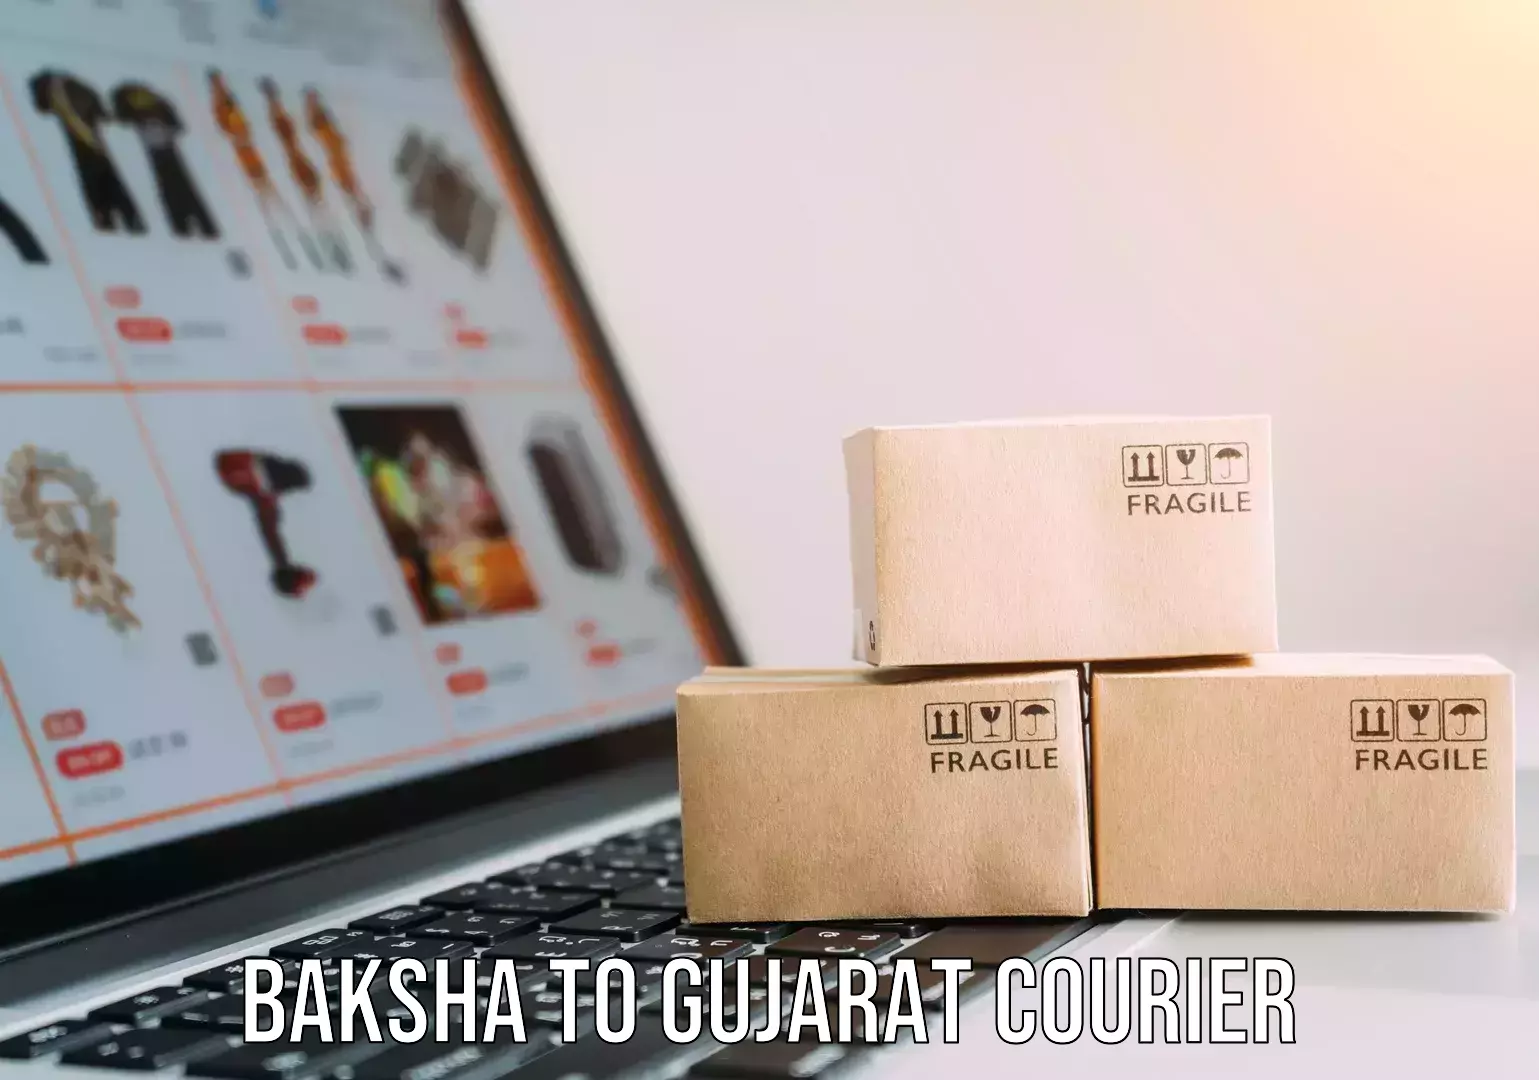 Quick dispatch service in Baksha to Gujarat